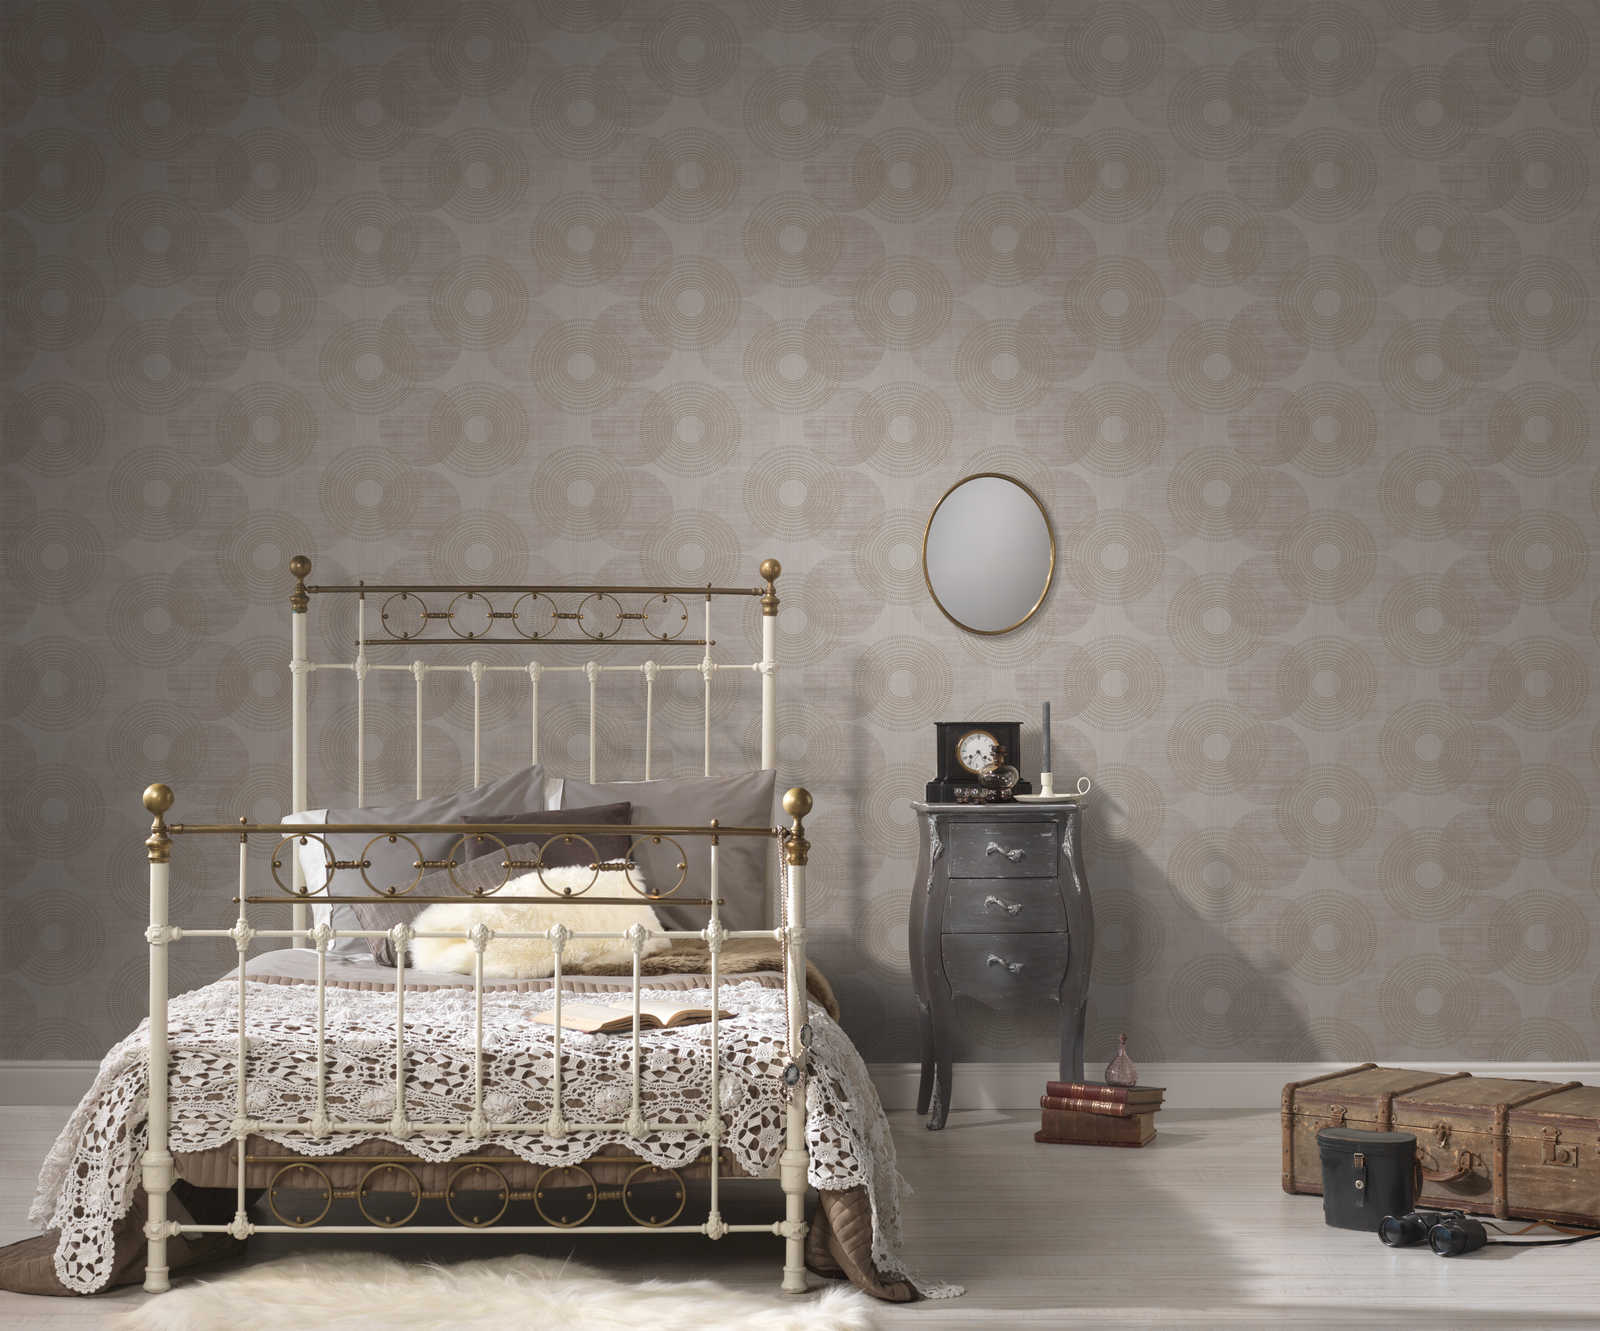             Effect wallpaper with geometric design in Scandi style - beige
        